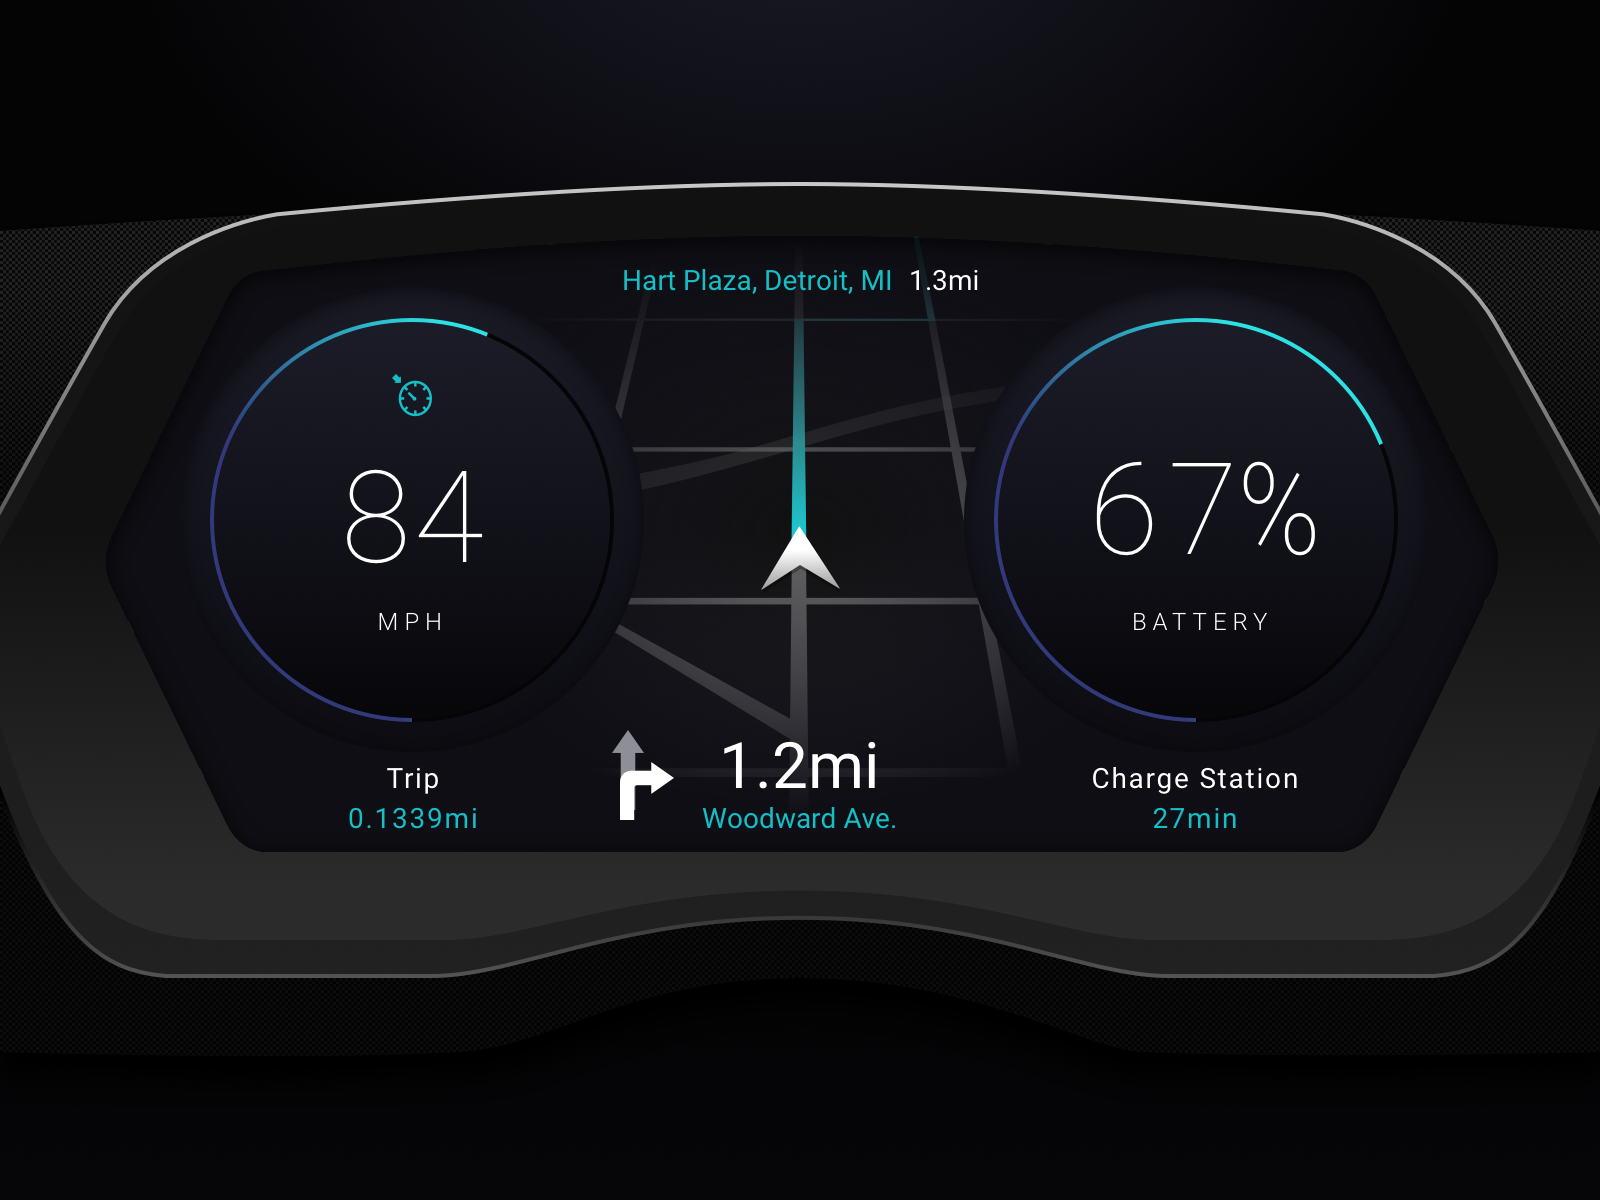 Спидометр UI. Приборная панель в UX UI. Car dashboard Android. Digital instrument Cluster.